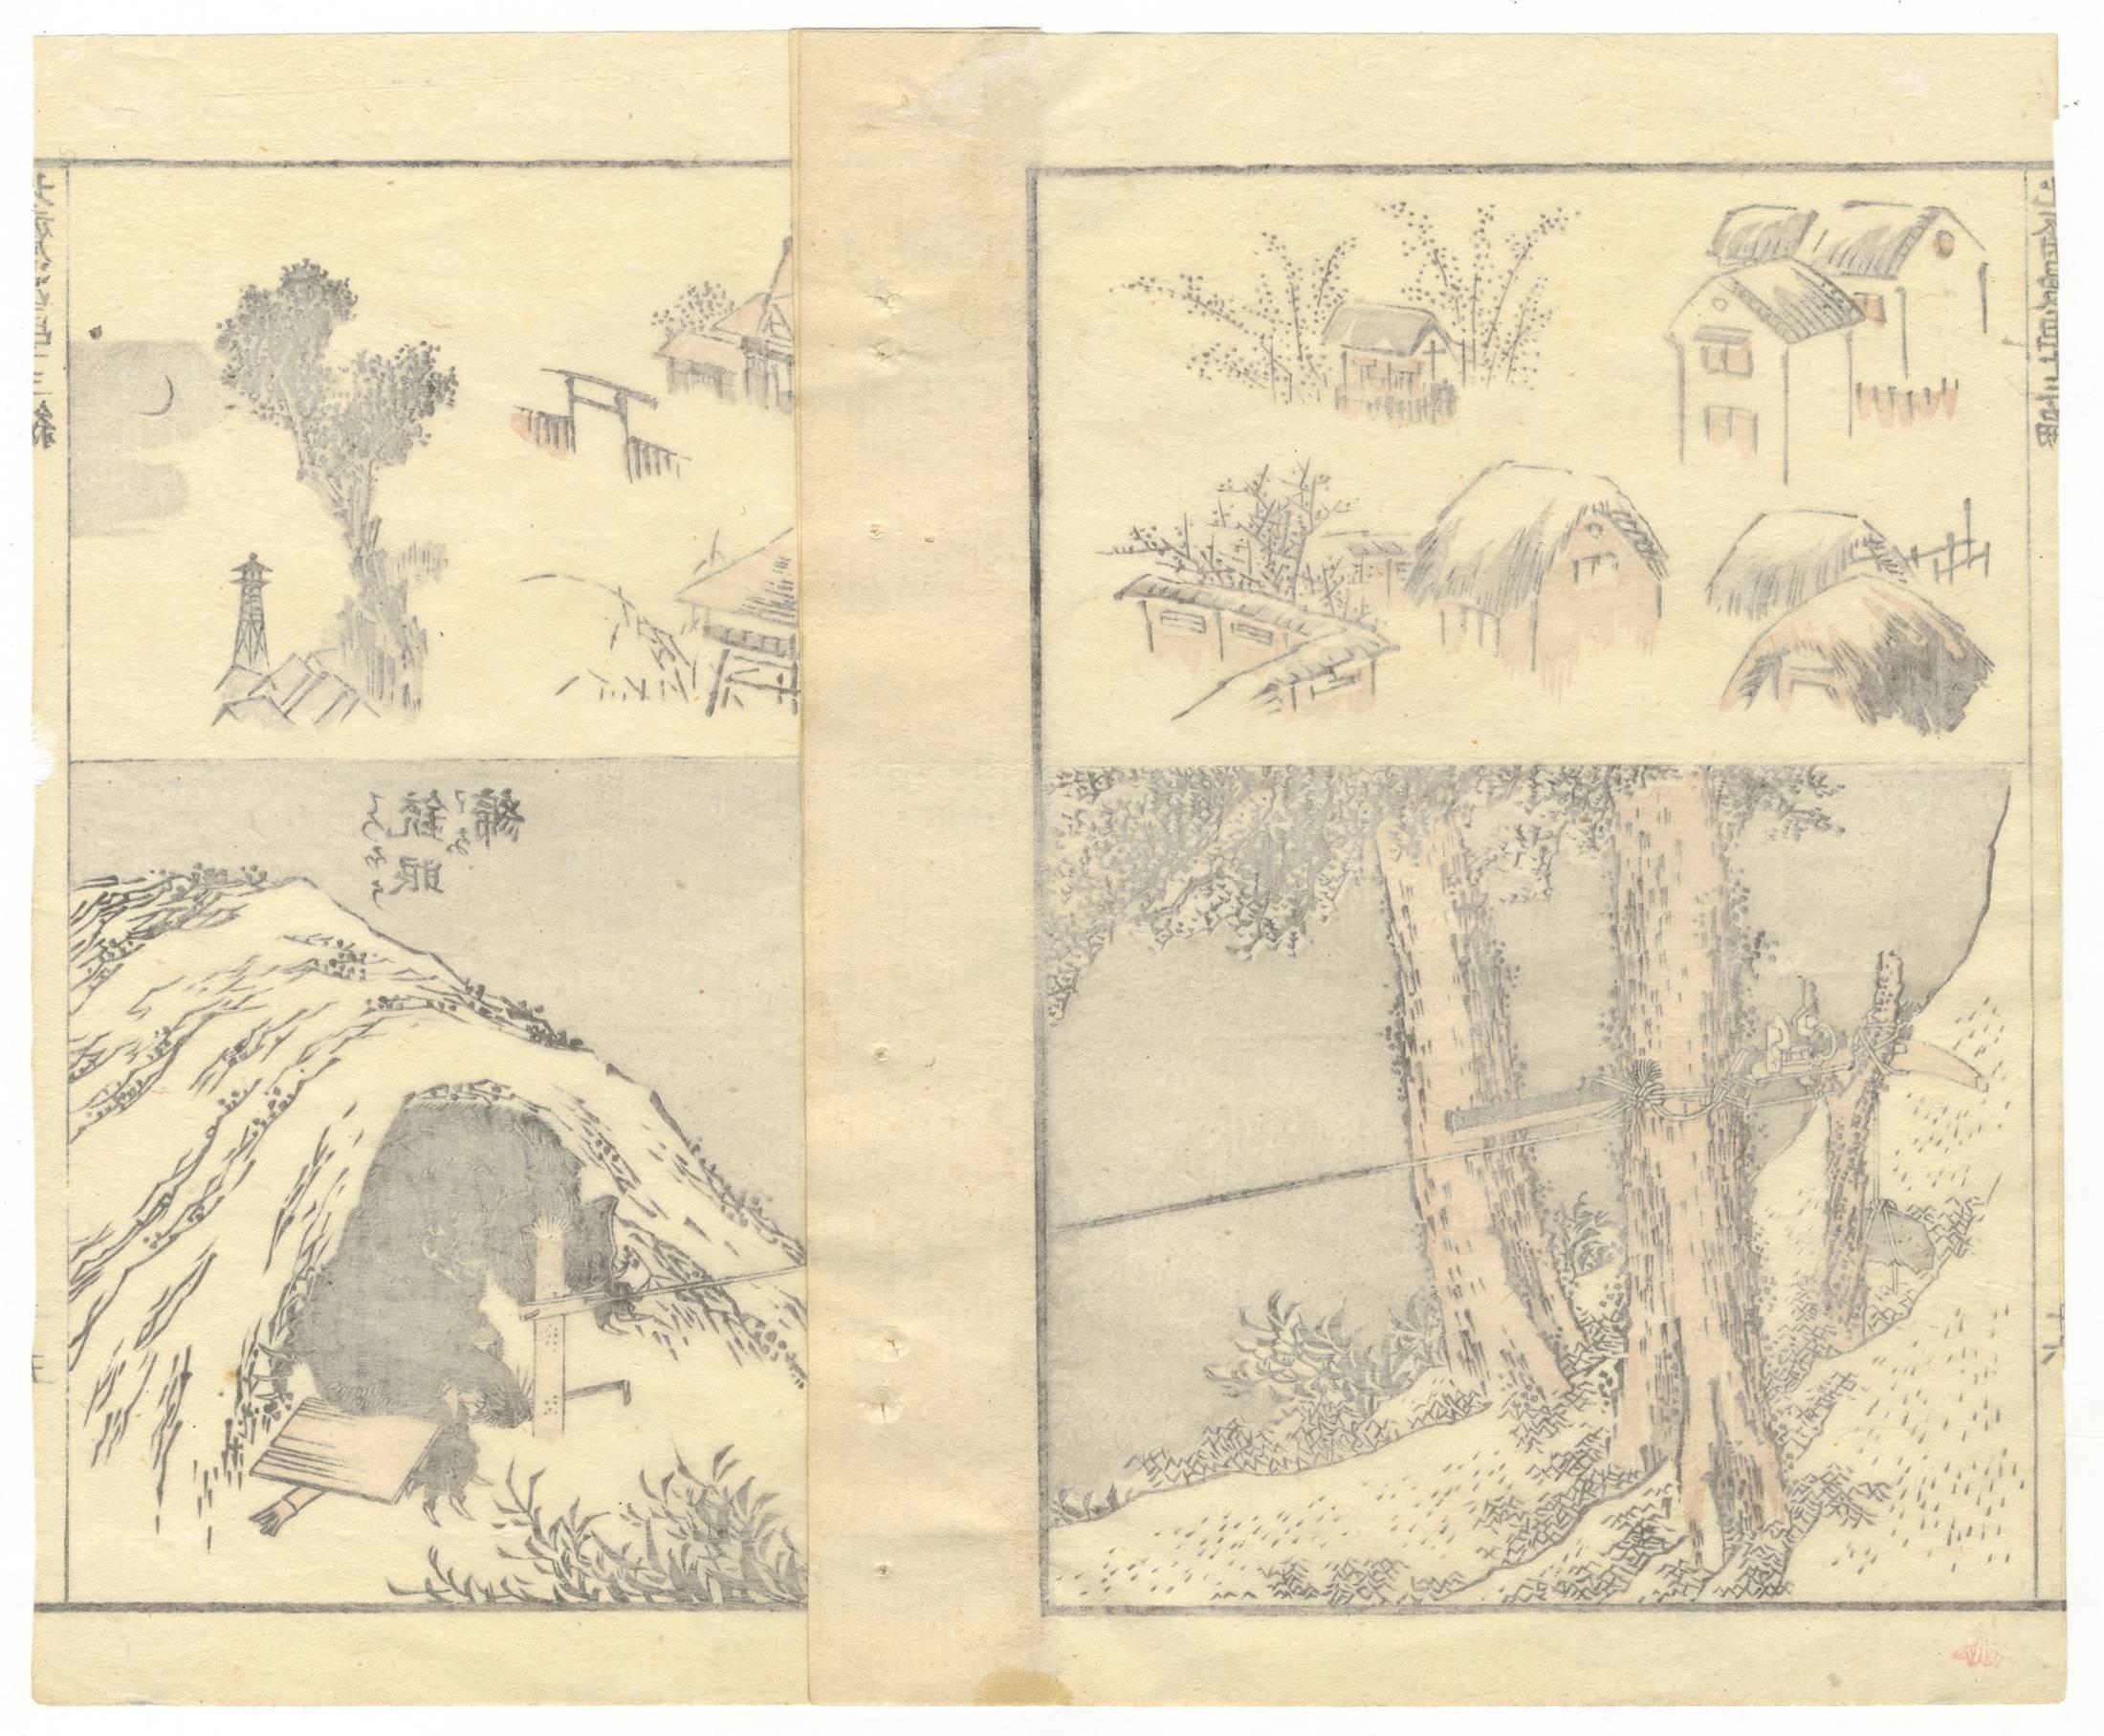 Hand-printed on traditional Japanese washi paper (mulberry tree paper).

Artist: Katsushika Hokusai
Title: Bear caught in a trap
Series: Hokusai Manga volume 3
Publisher: Toheki-do
Published: 1815

This print is from the Hokusai Manga (sketches)